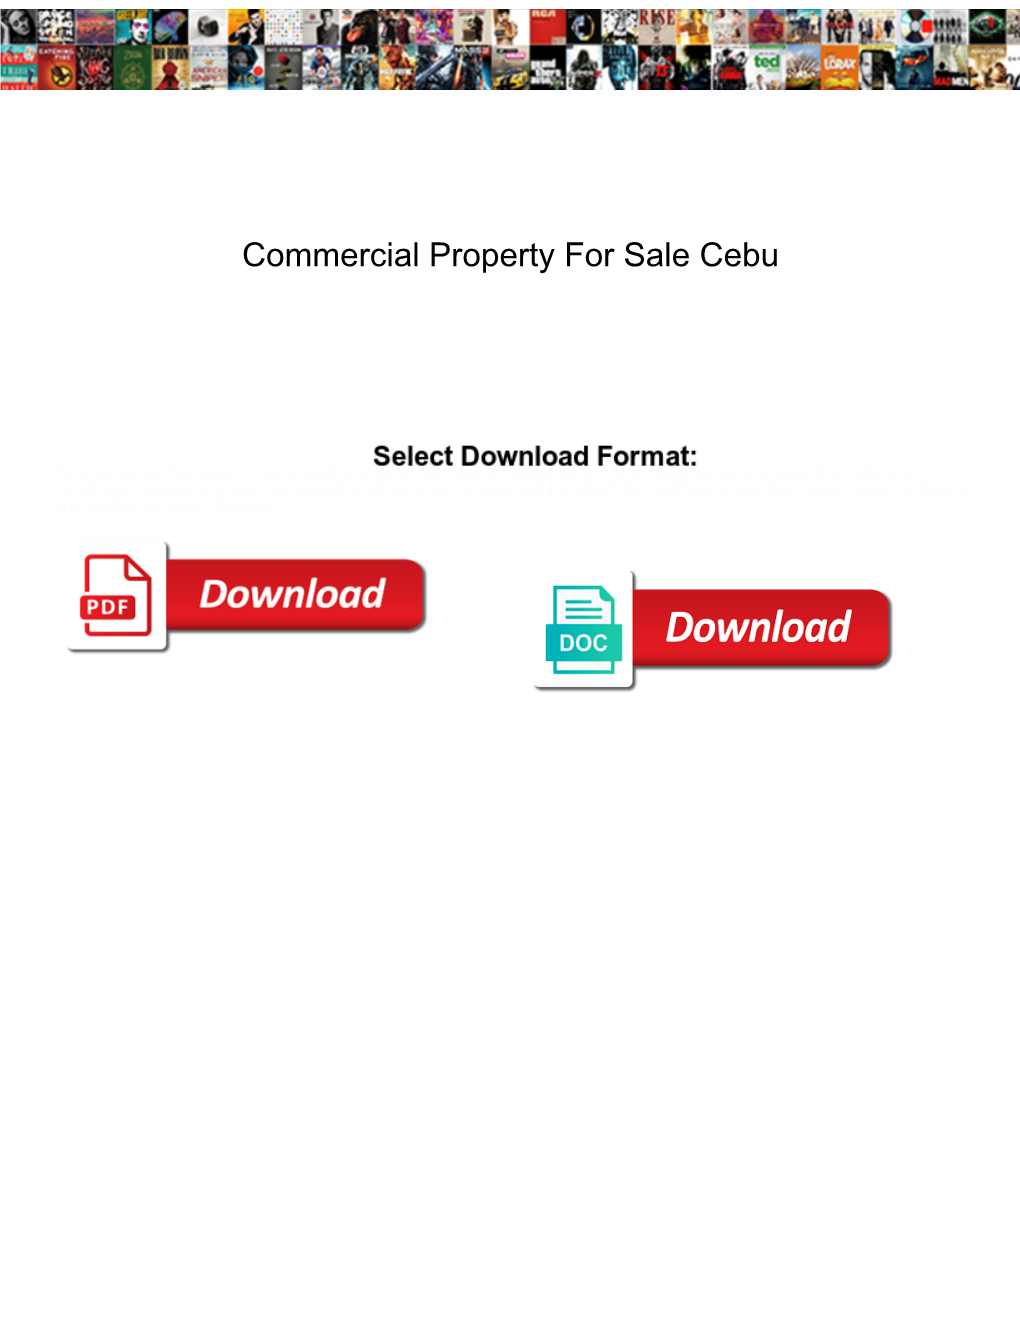 Commercial Property for Sale Cebu